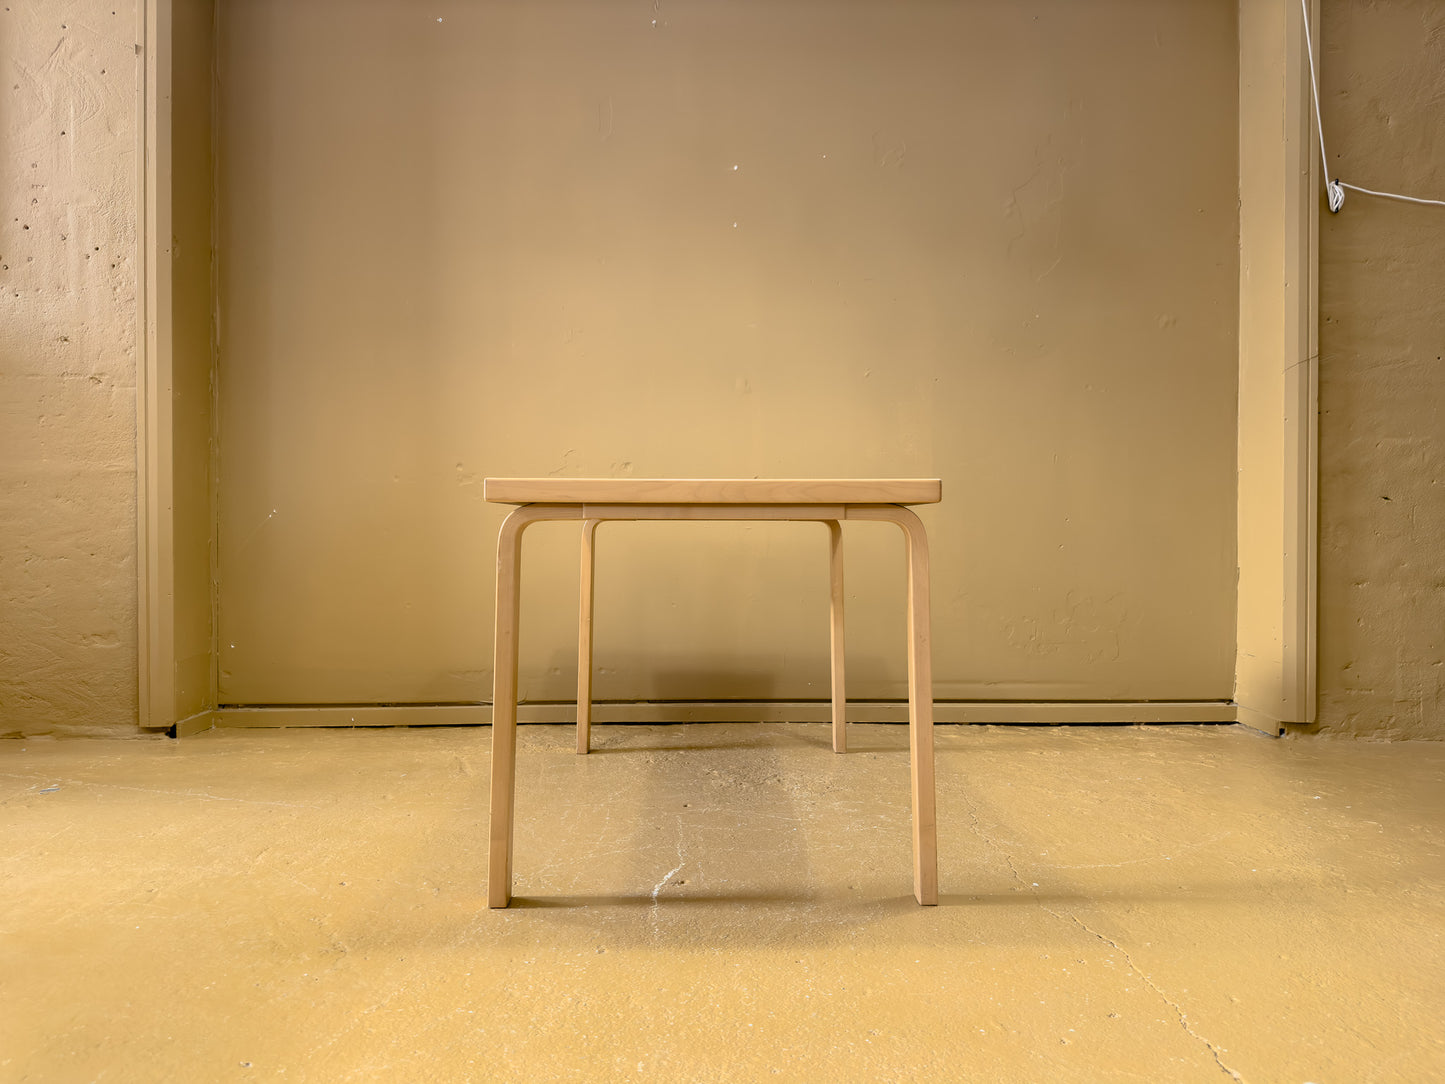 Alvar Aalto Table